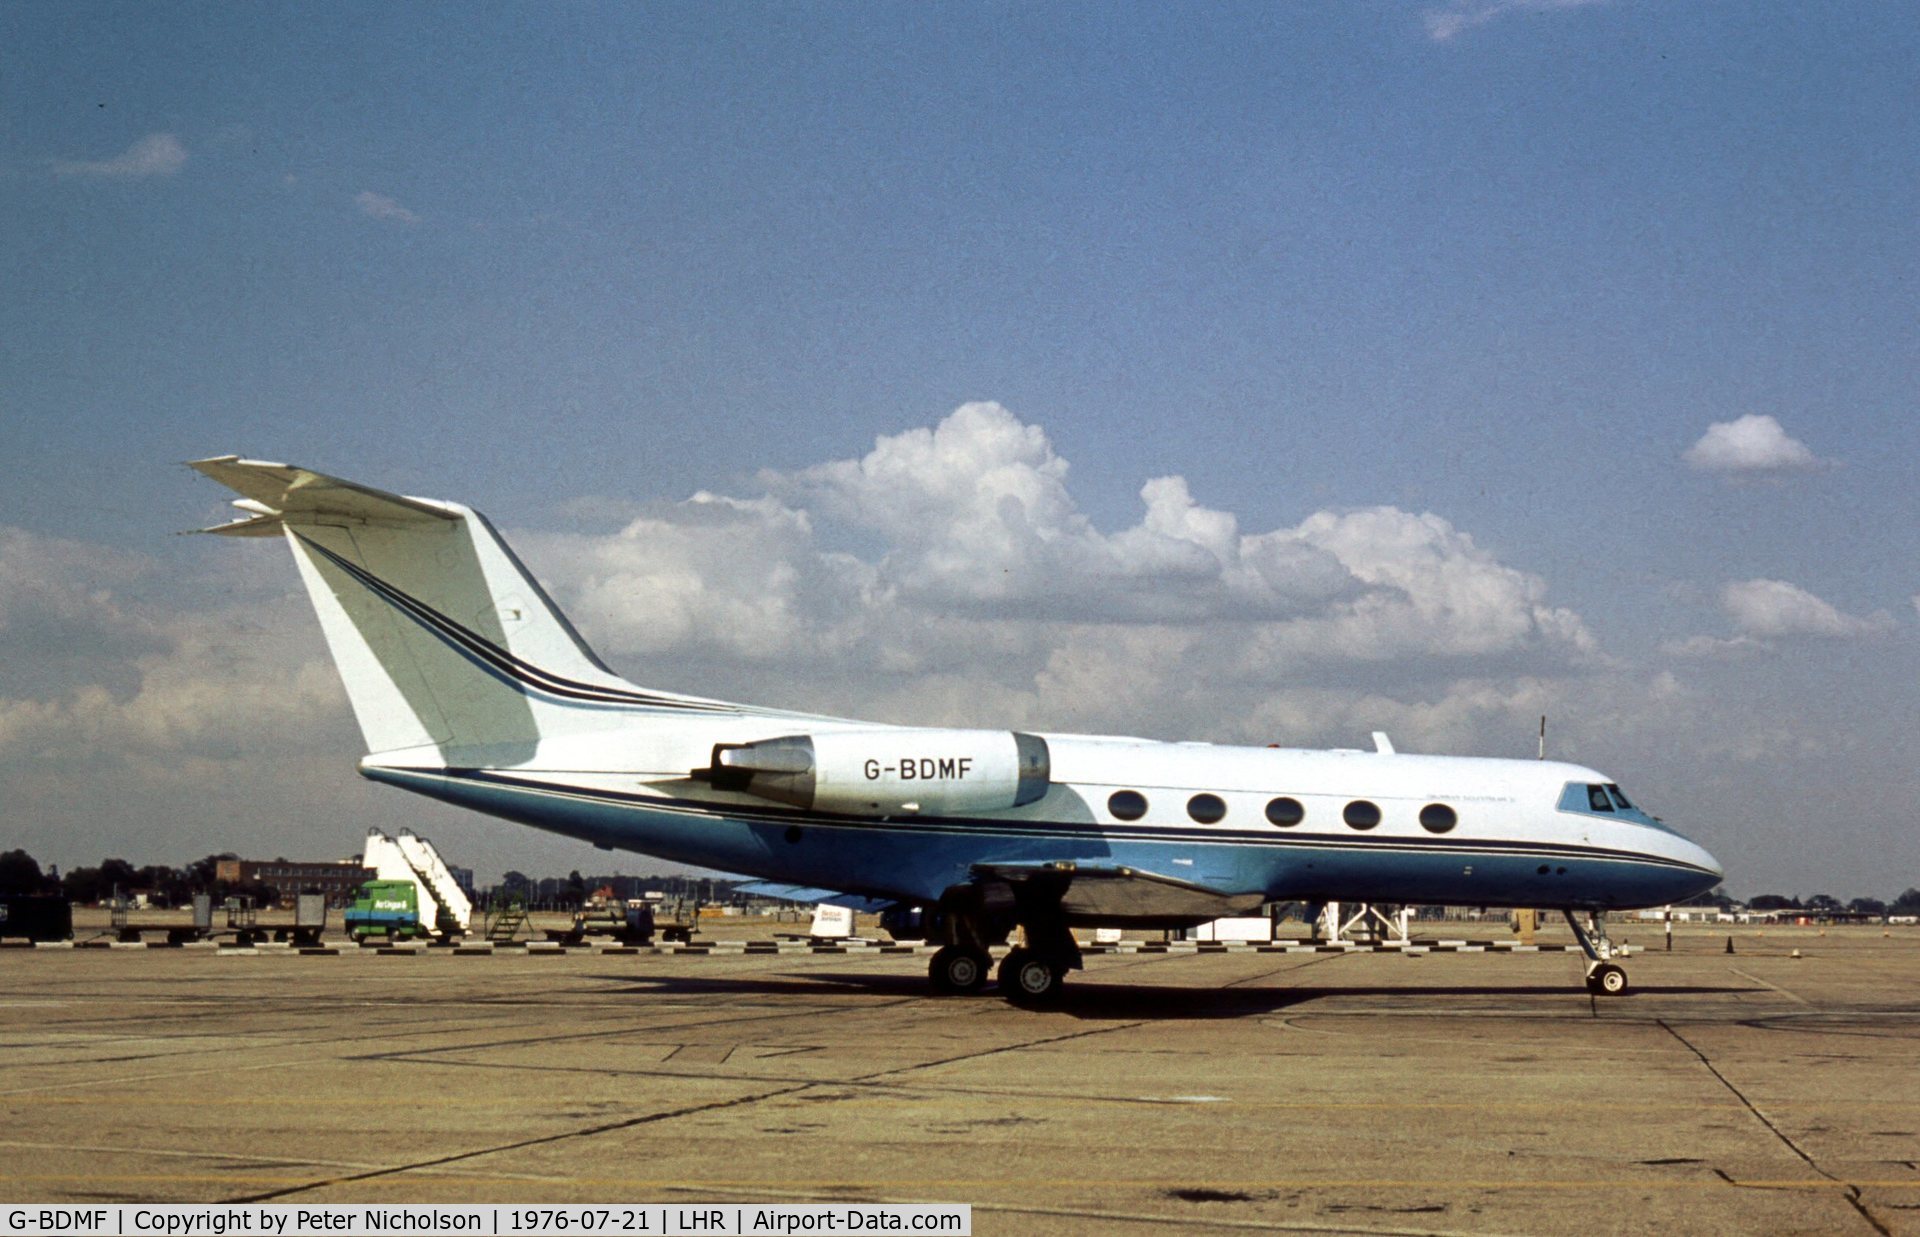 G-BDMF, 1971 Grumman G-1159 Gulfstream II C/N 103, This Gulfstream II visited London Heathrow in the Summer of 1976.